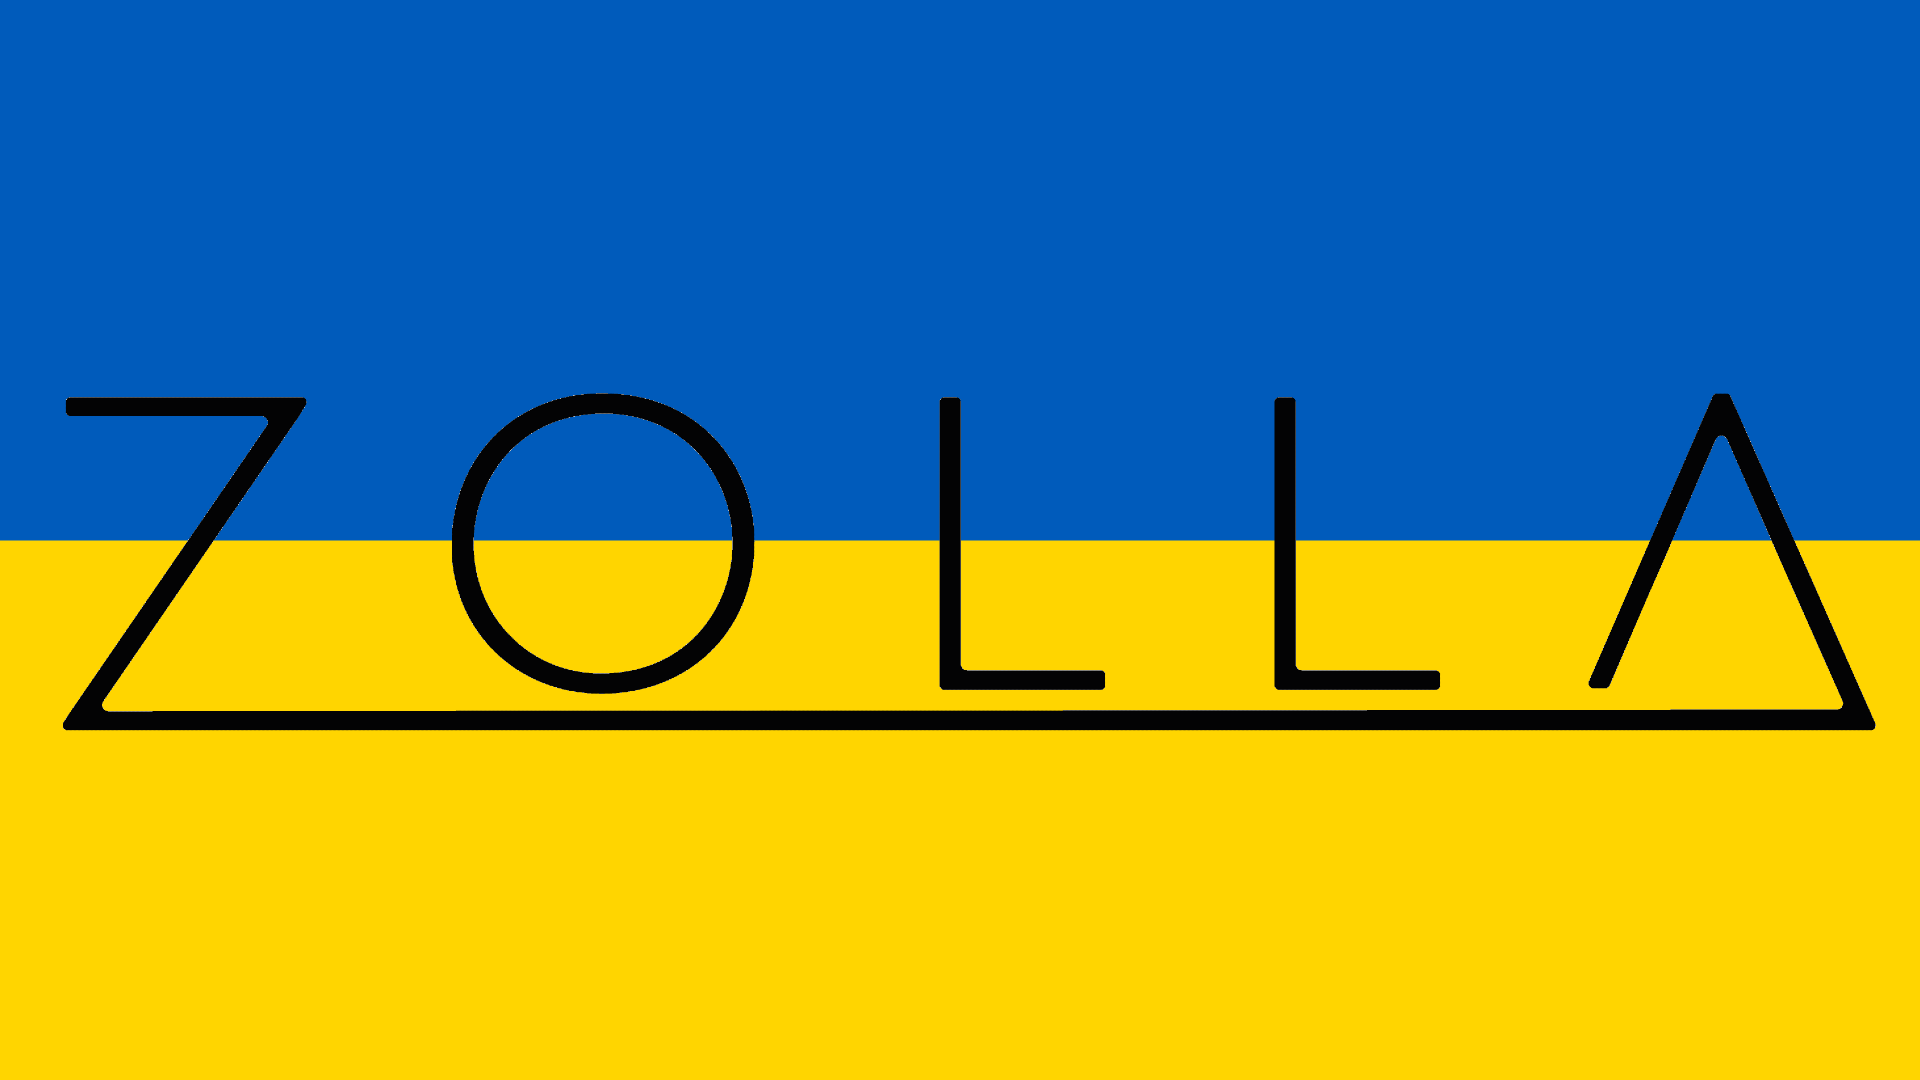 Zolla & Ukraine